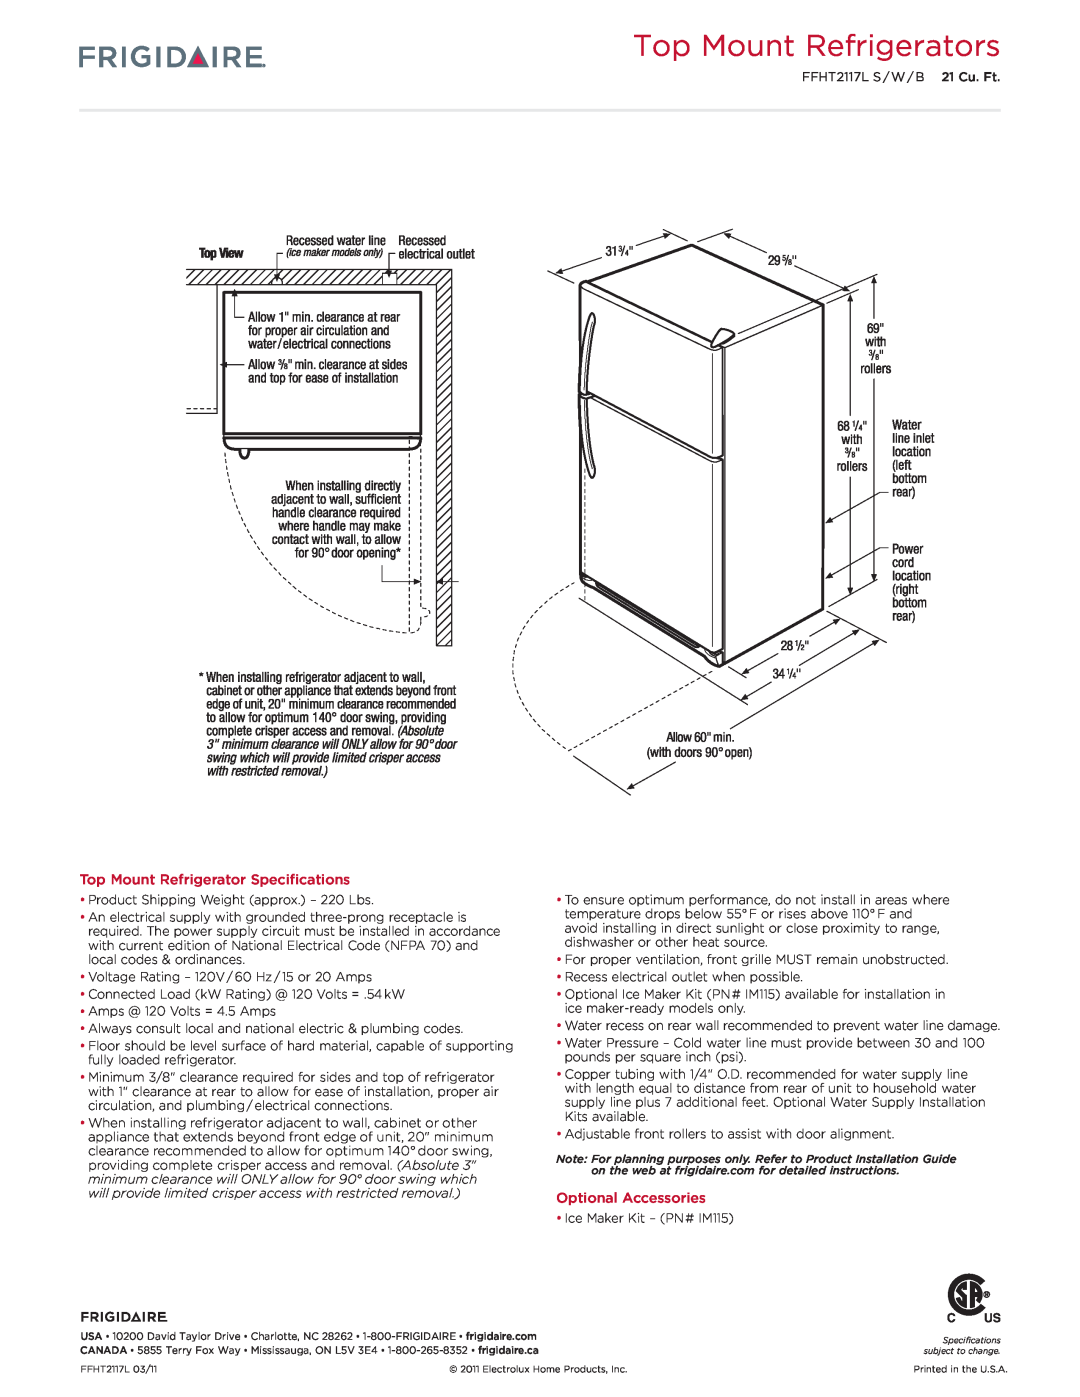 Frigidaire FFHT2117L dimensions Top Mount Refrigerators, Top Mount Refrigerator Specifications, Optional Accessories 